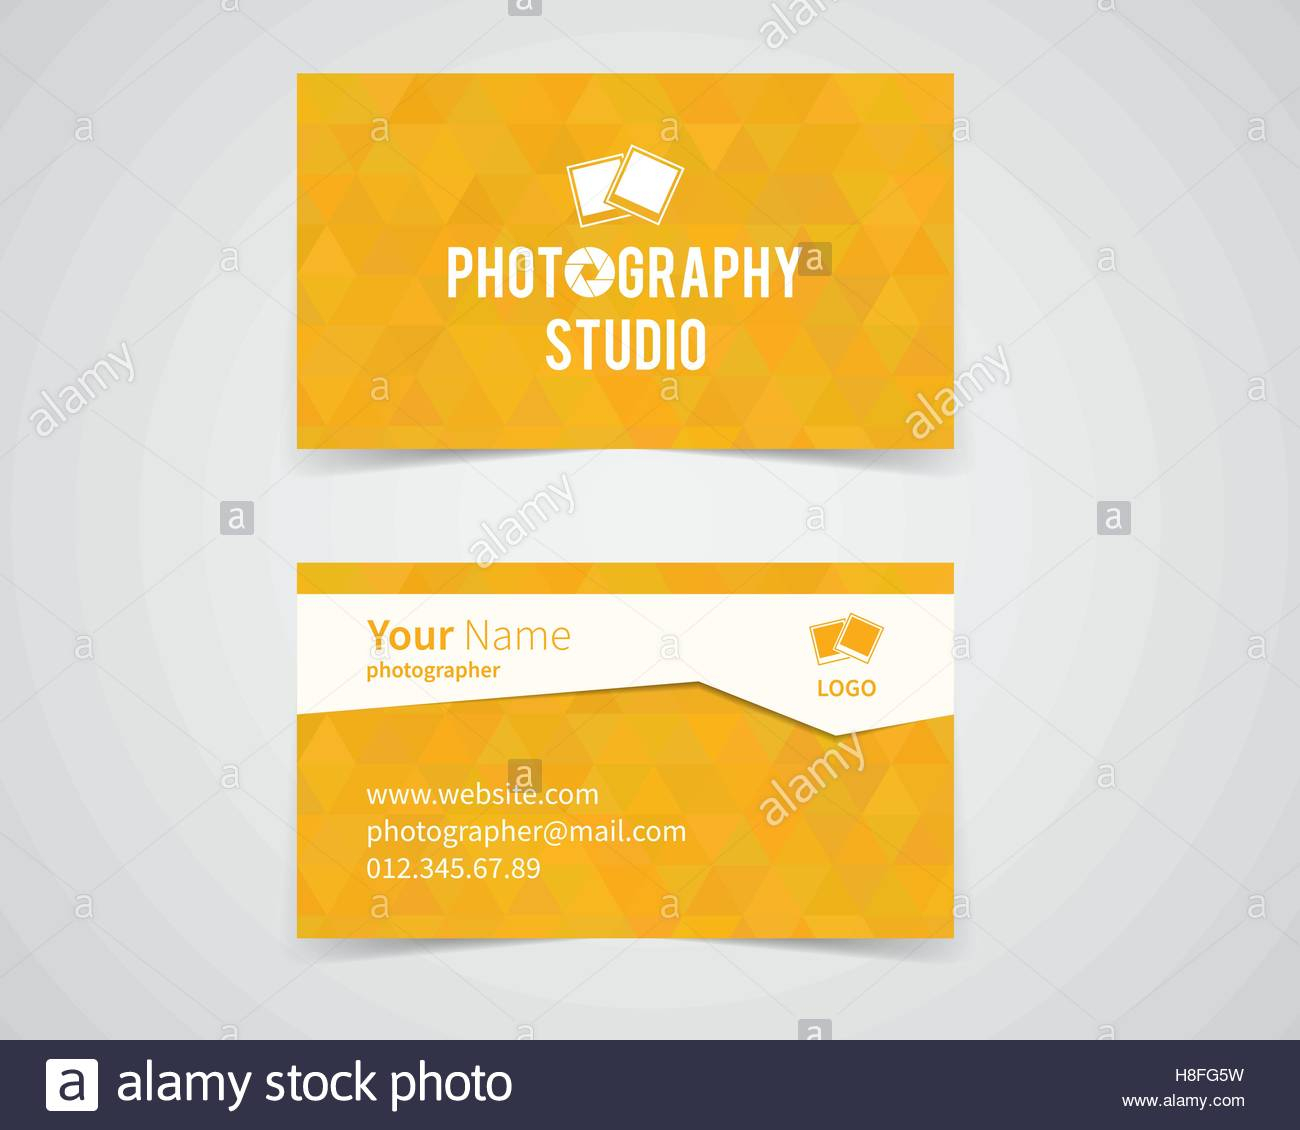 Modern Light Business Card Template For Photography Studio Regarding Photographer Id Card Template